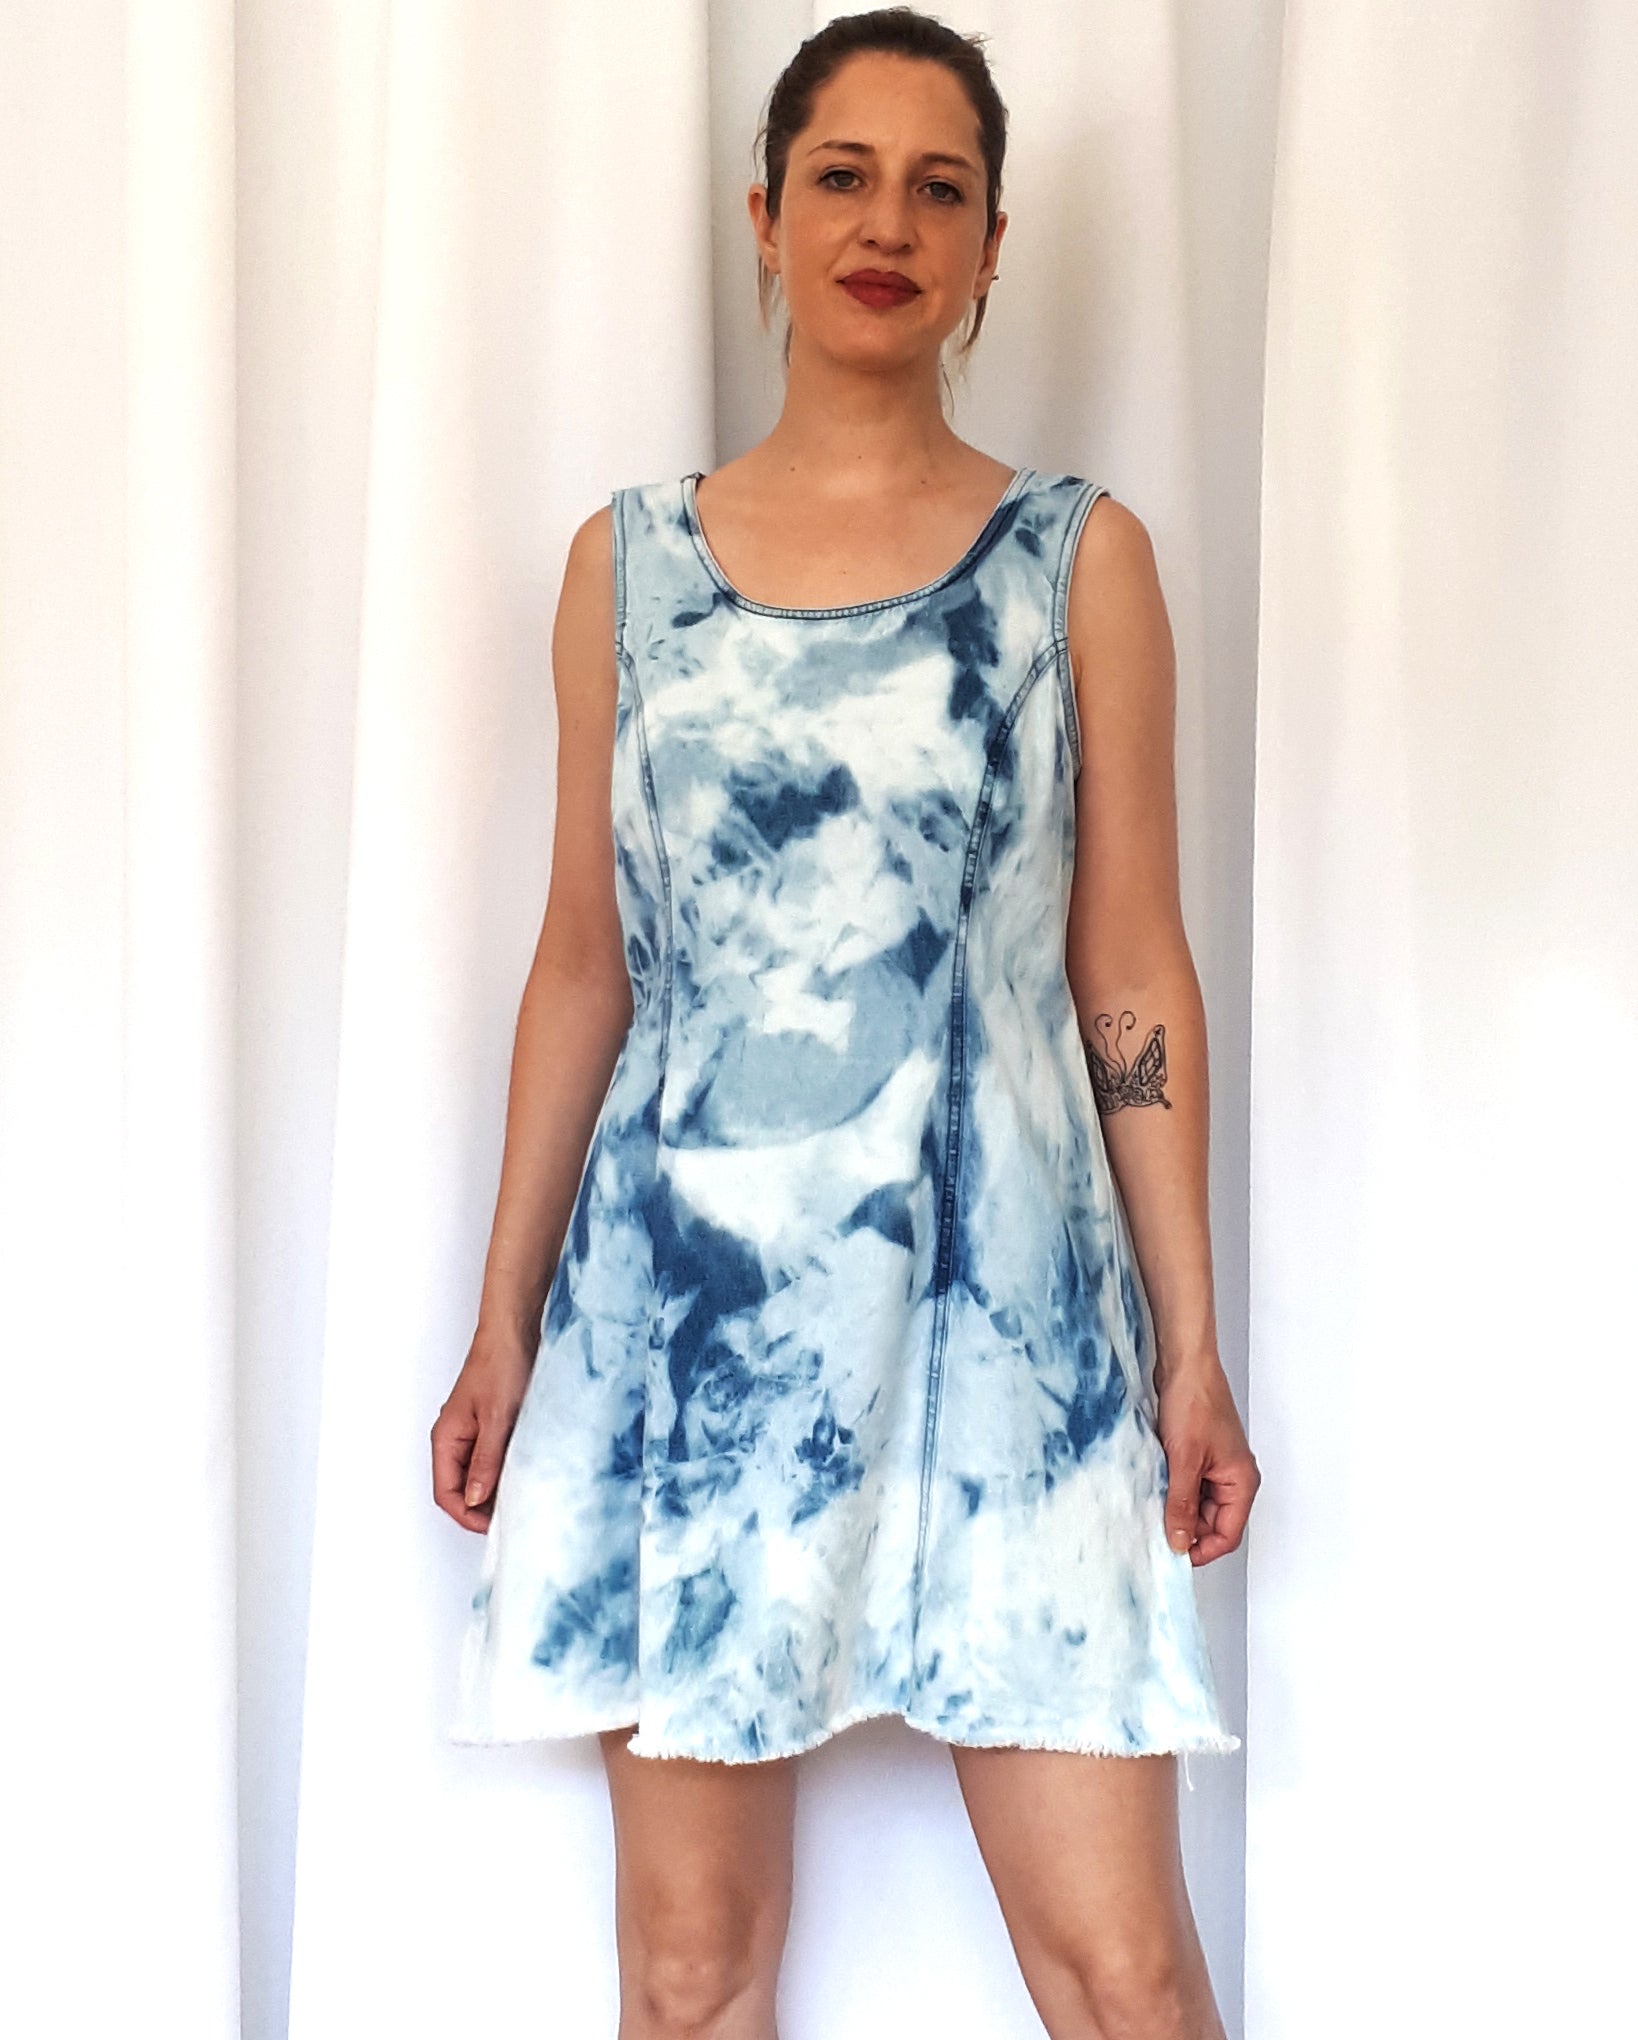 Covet Rework / Upcycled Denim Bleached Dress Size Medium